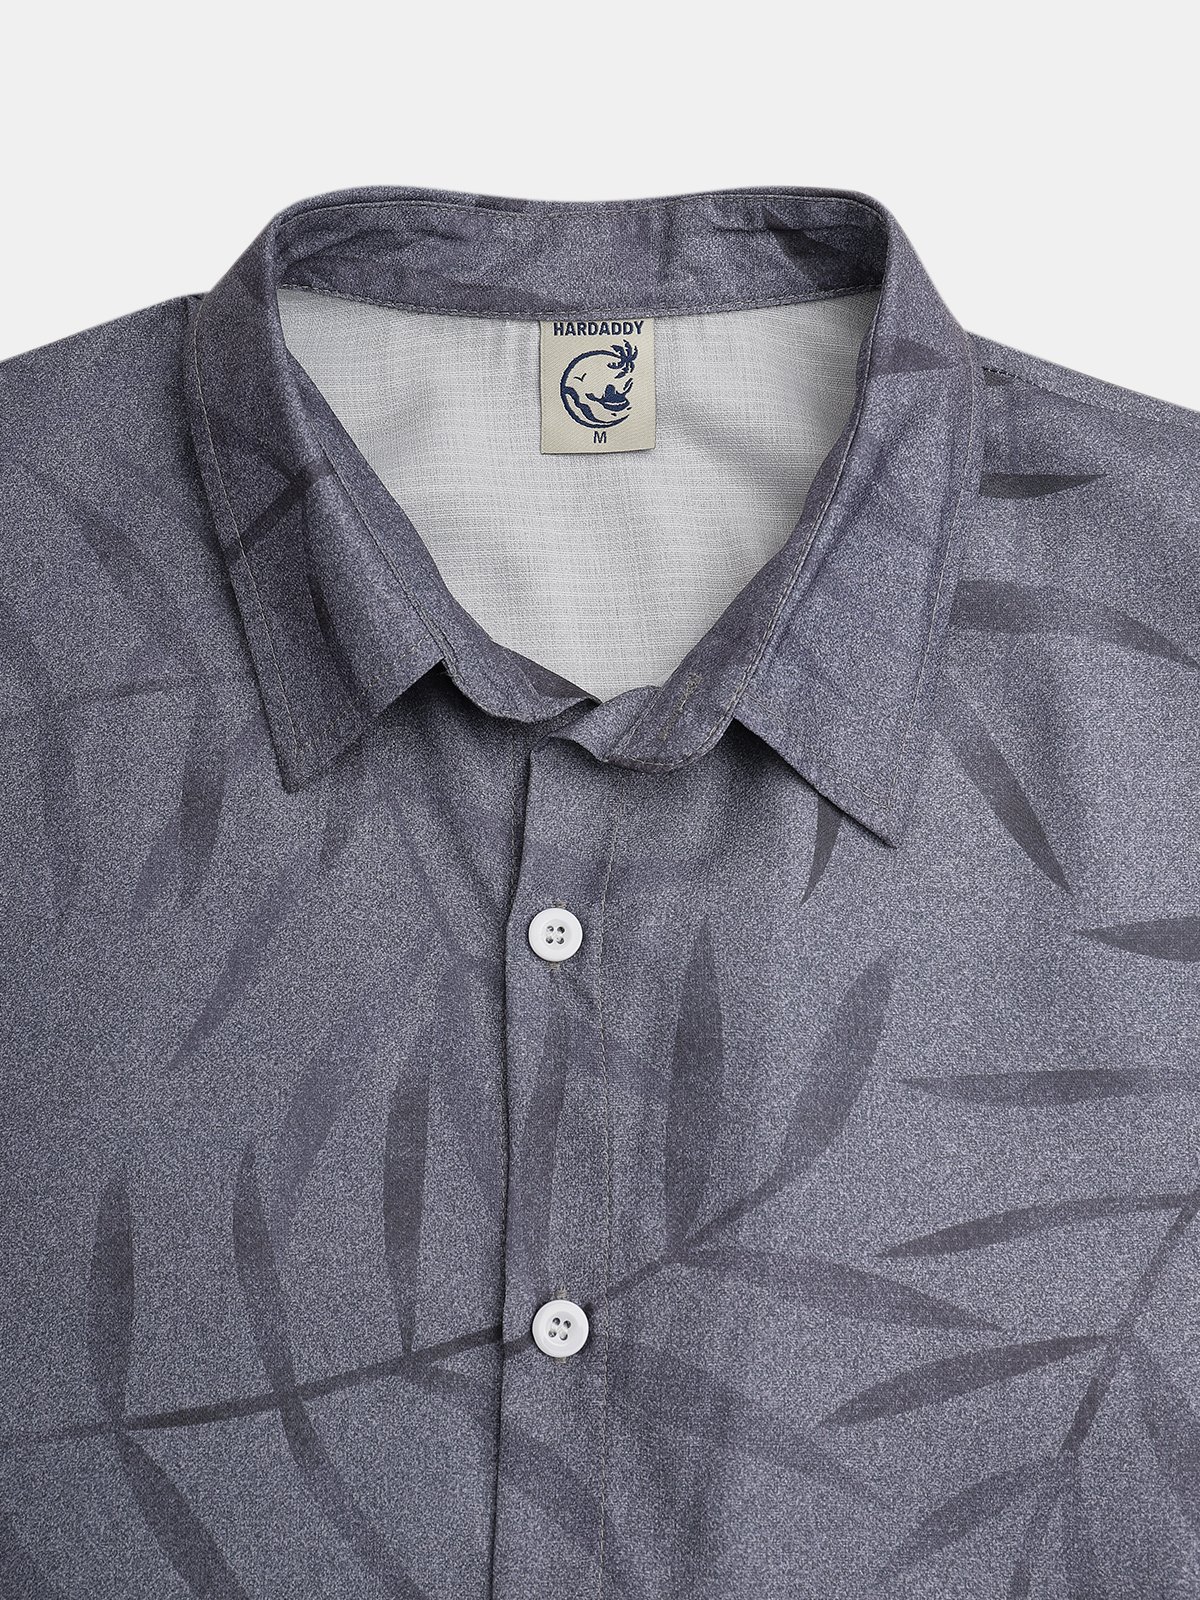 Hardaddy Leaf Short Sleeve Resort Shirt